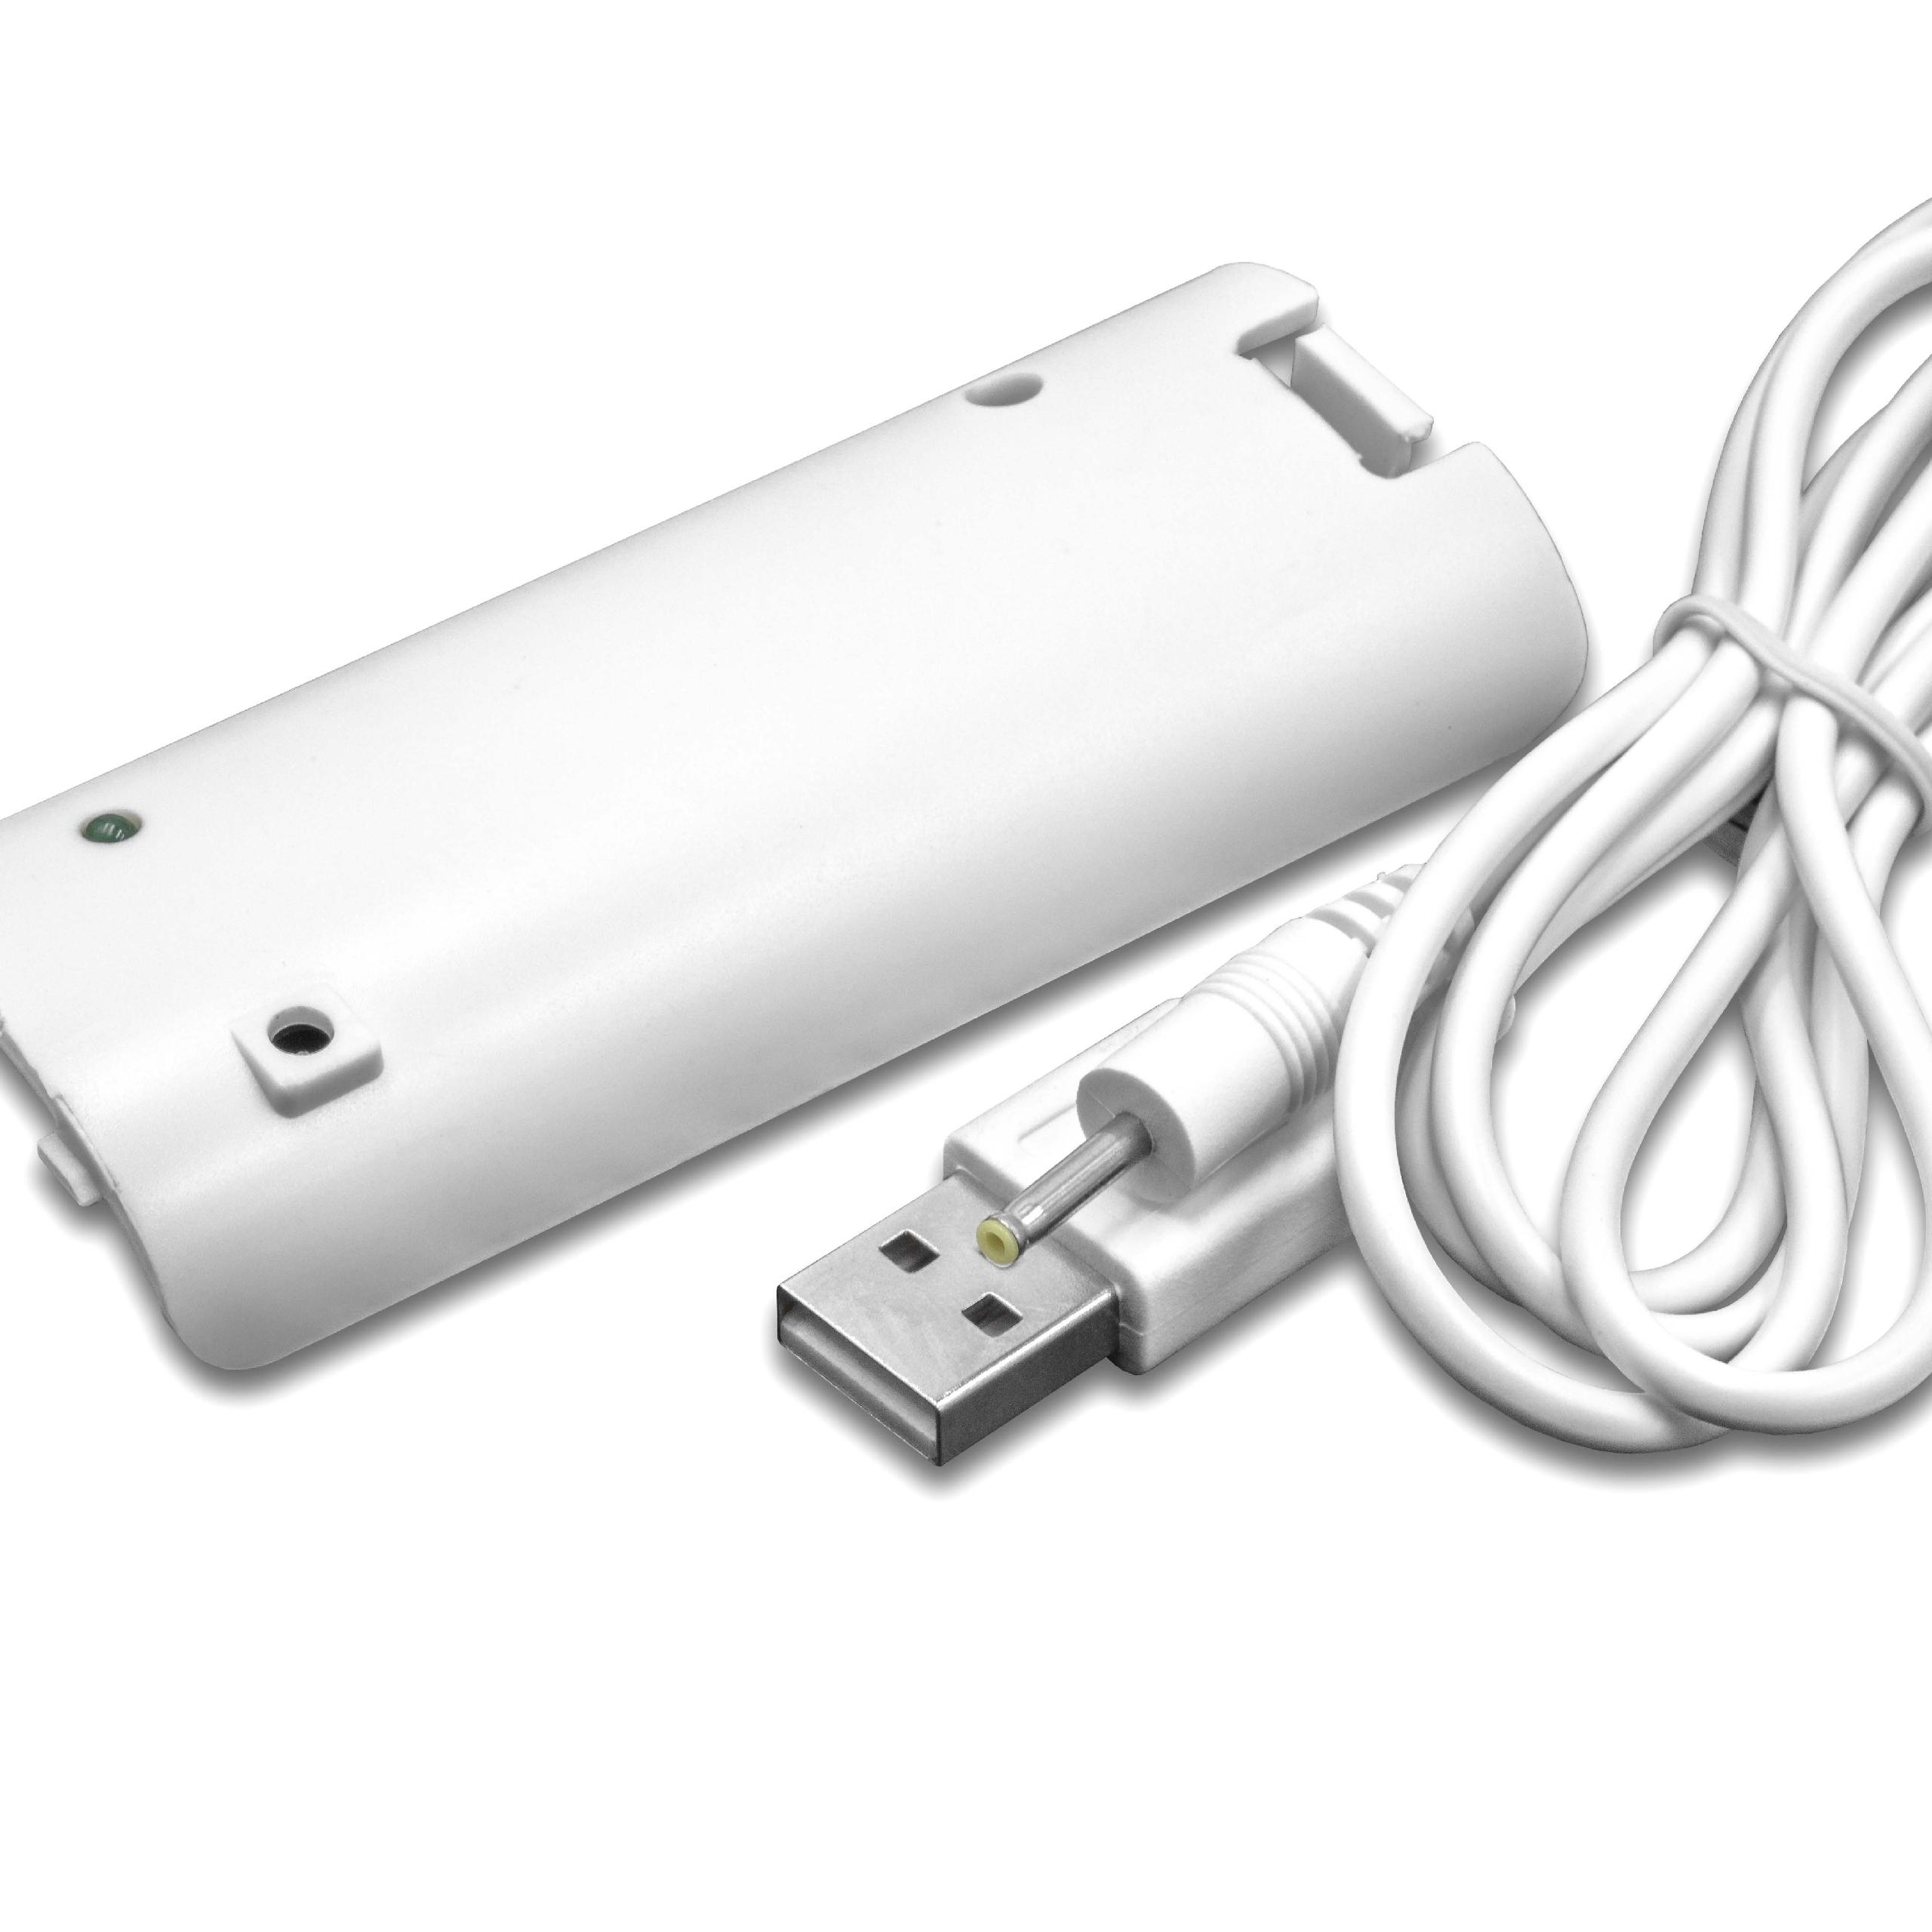 VHBW kompatibel mit Nintendo Wii Controller, 400 Akku Volt, Remote - Plus NiMH 2.4 Spielekonsole